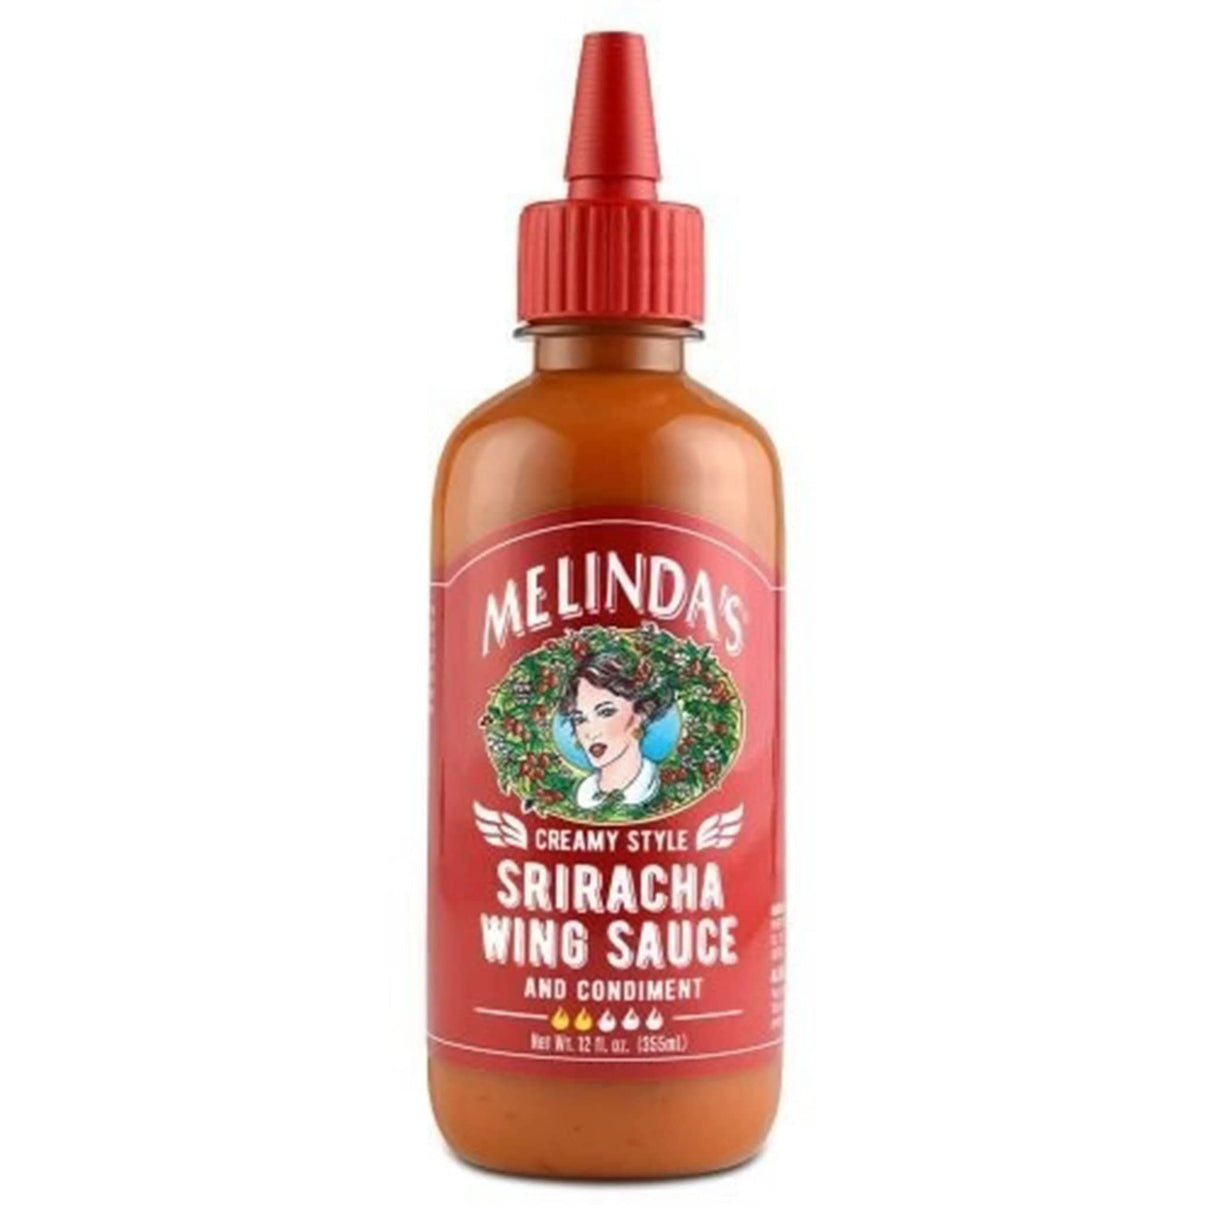 Melinda’s Creamy Style Sriracha Wing Sauce and Condiment